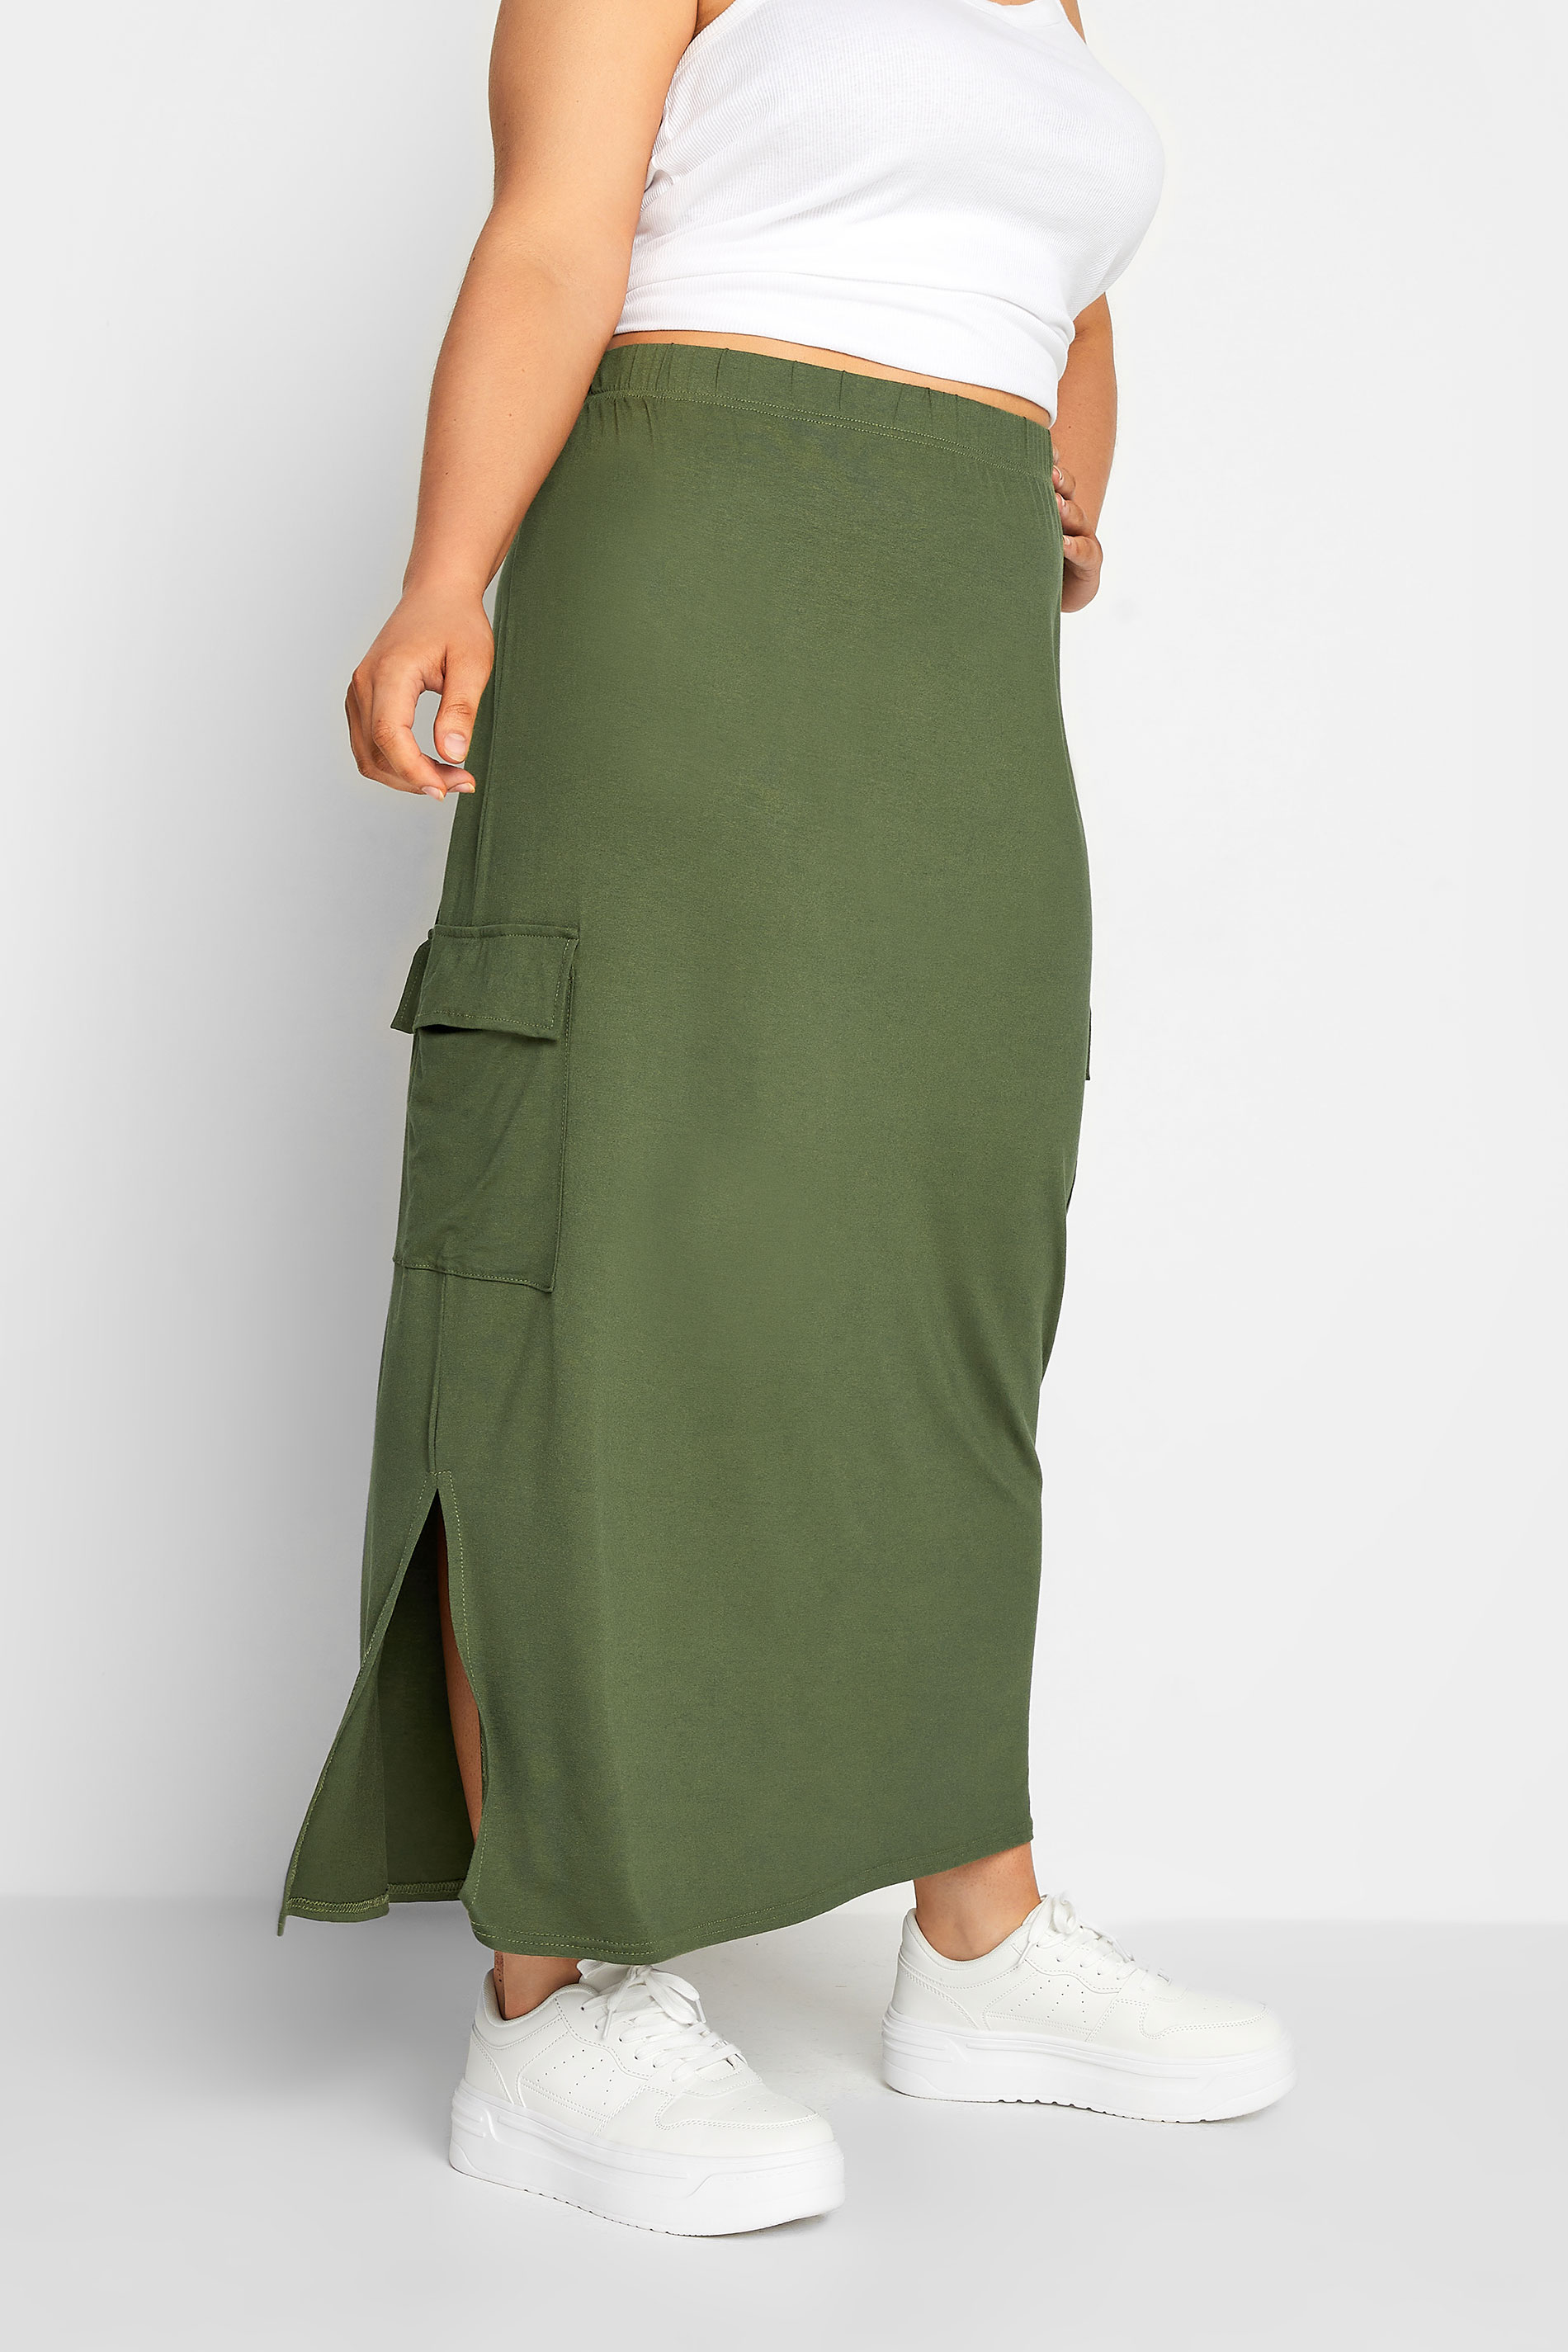 Yours Plus Size Khaki Green Maxi Cargo Skirt | Yours Clothing 1